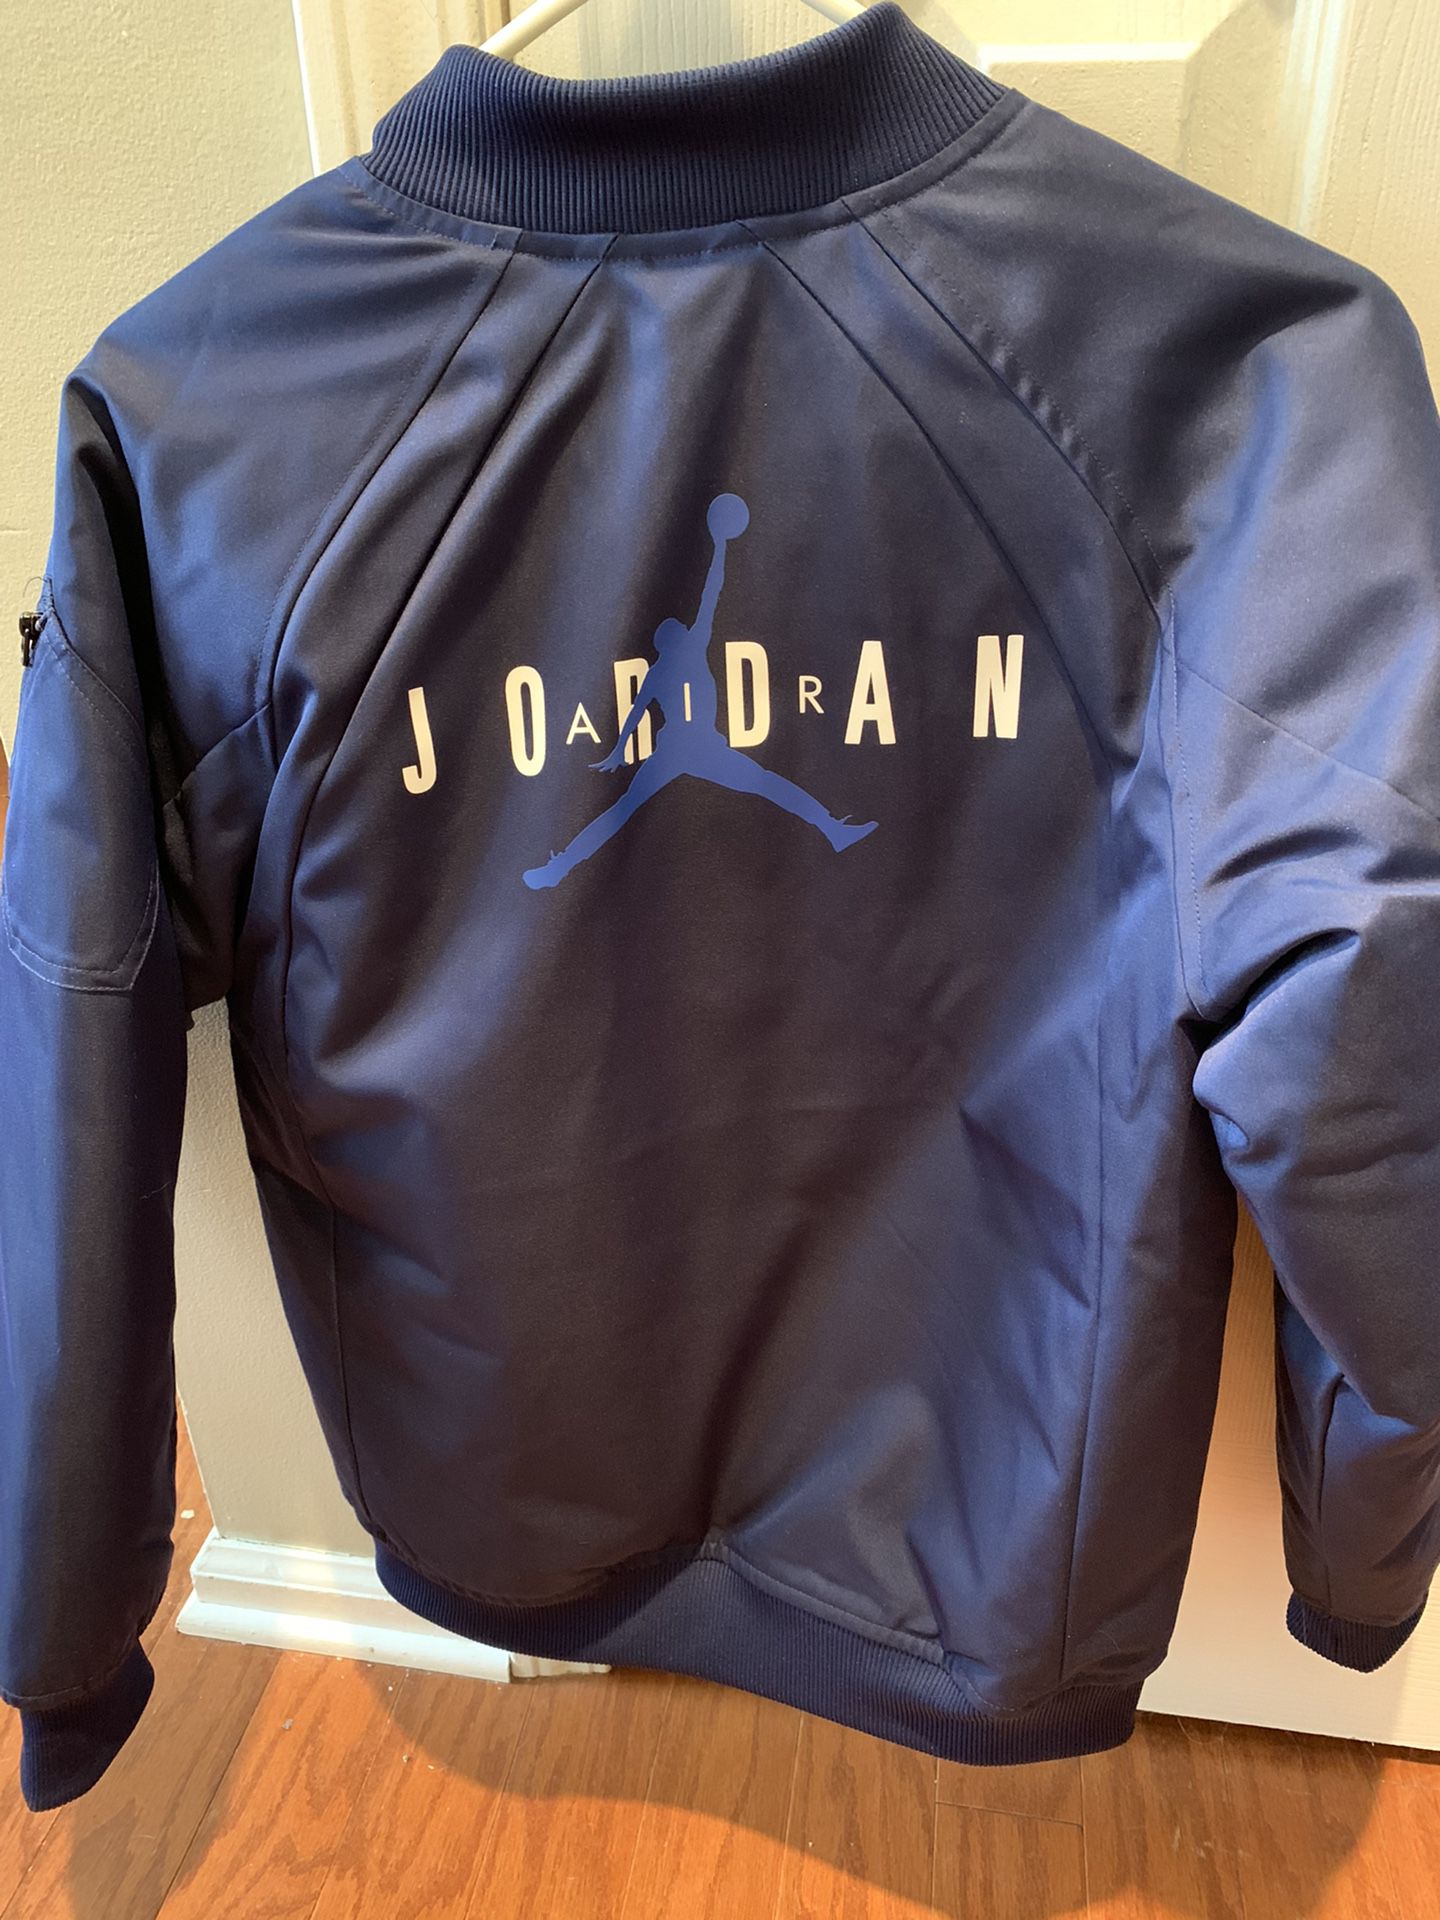 Jordan-brand bomber jacket, navy blue - Youth Large